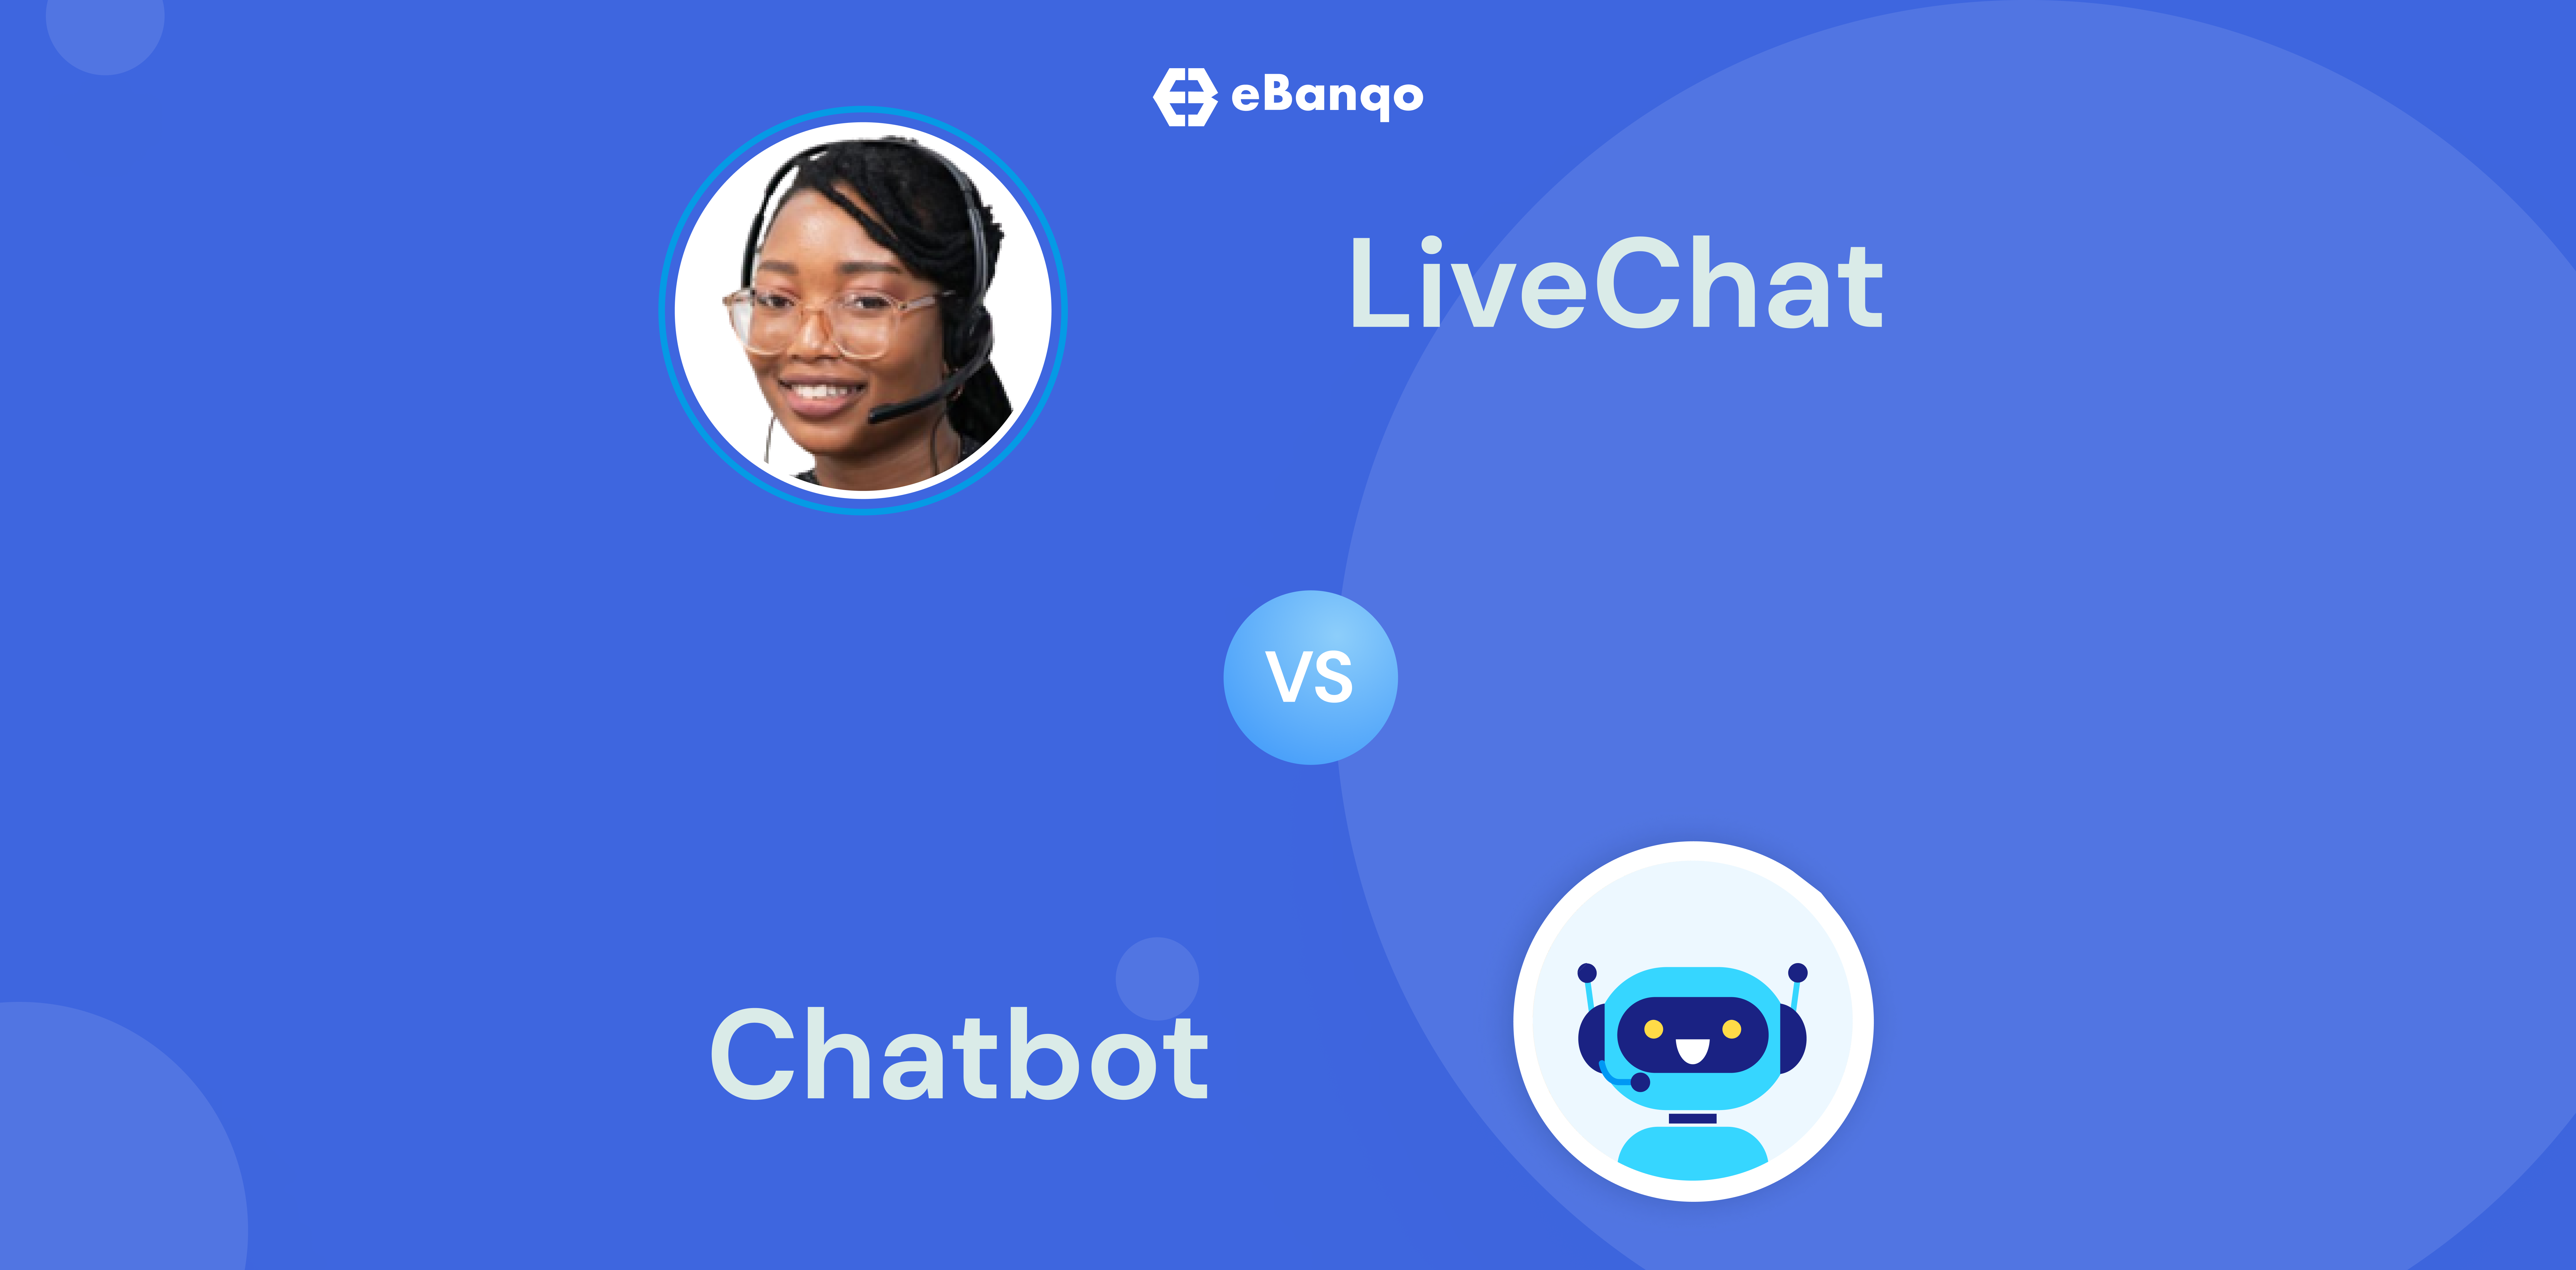 Live chat vs Chatbot